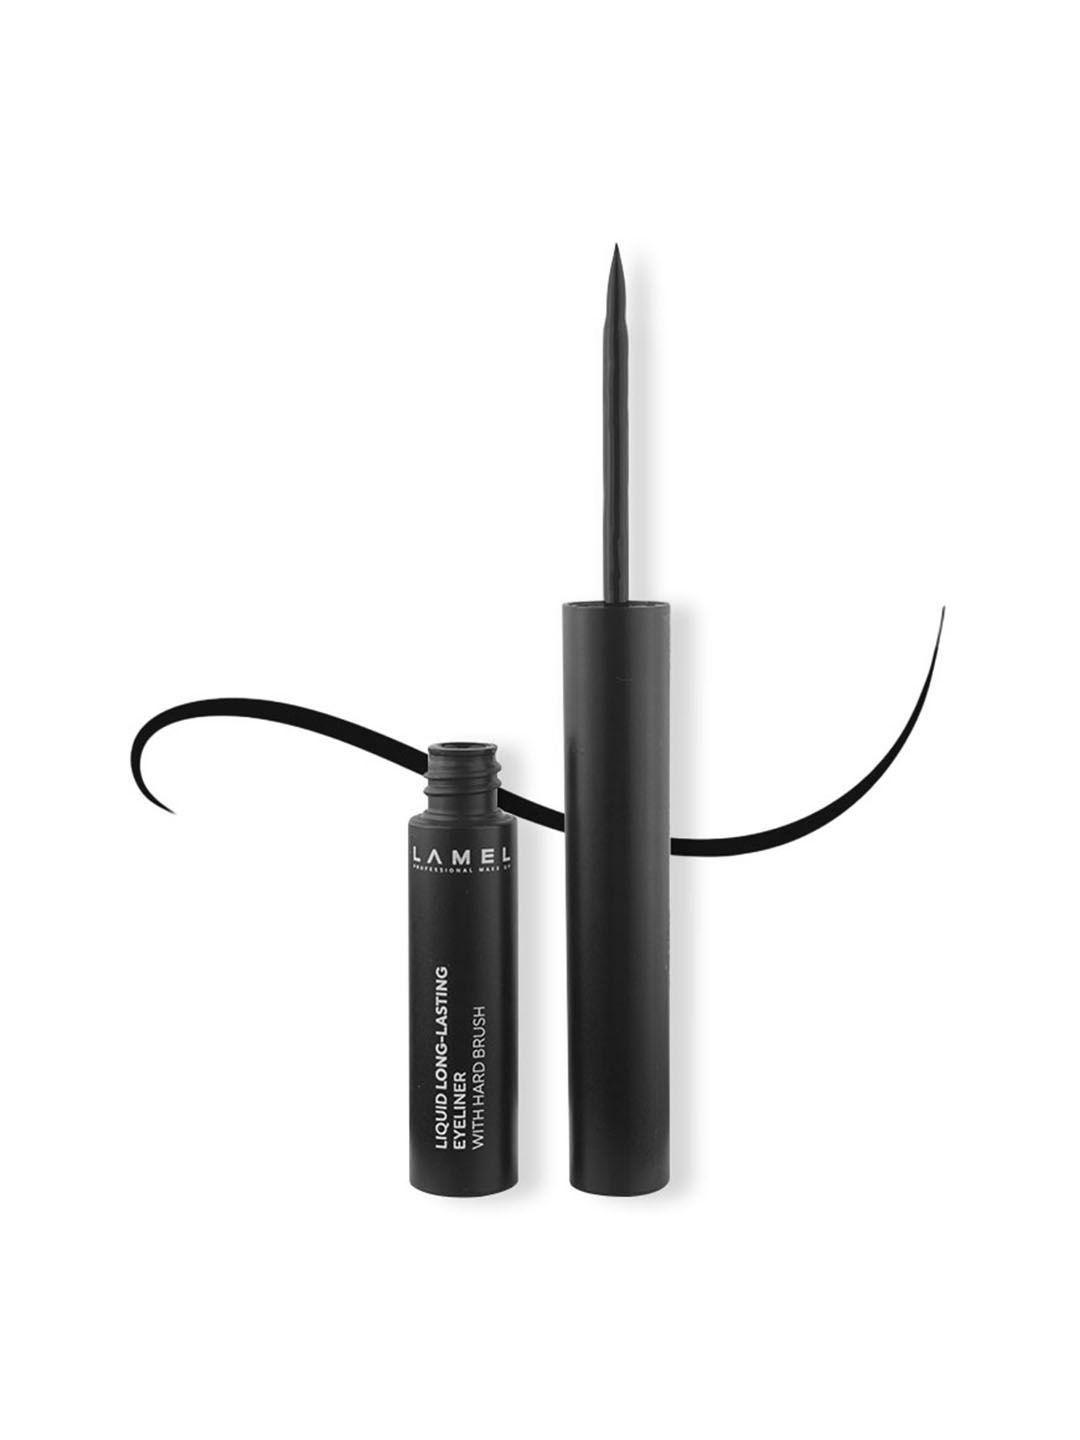 lamel professional long-lasting liquid eyeliner with hard brush 3.5ml - black 01